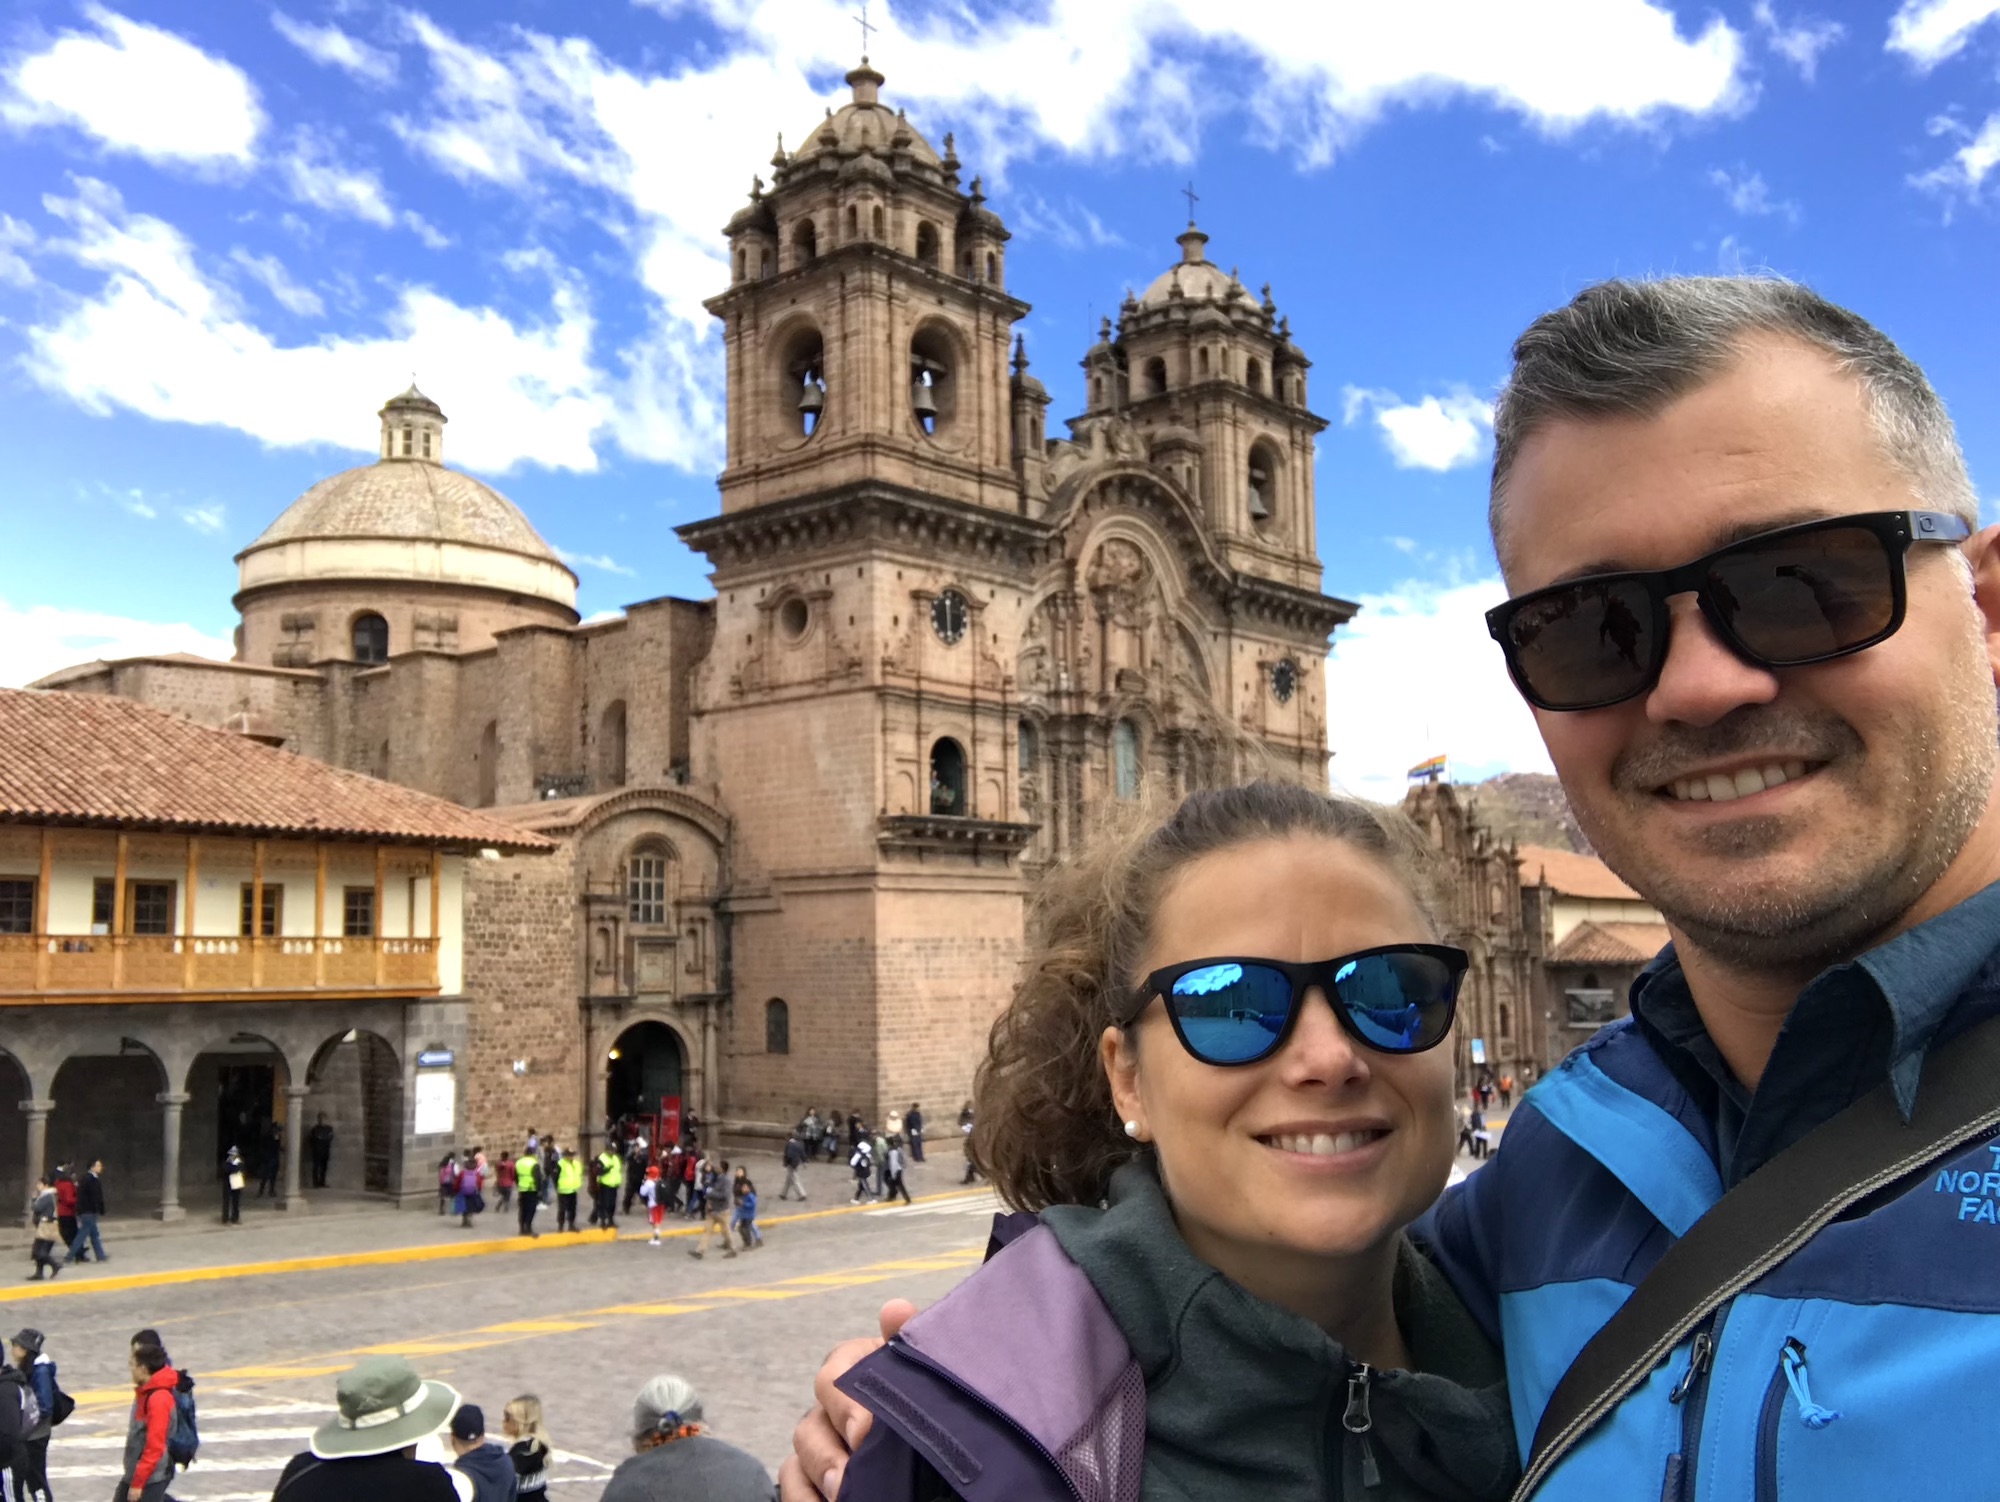 Cusco city center, Peru